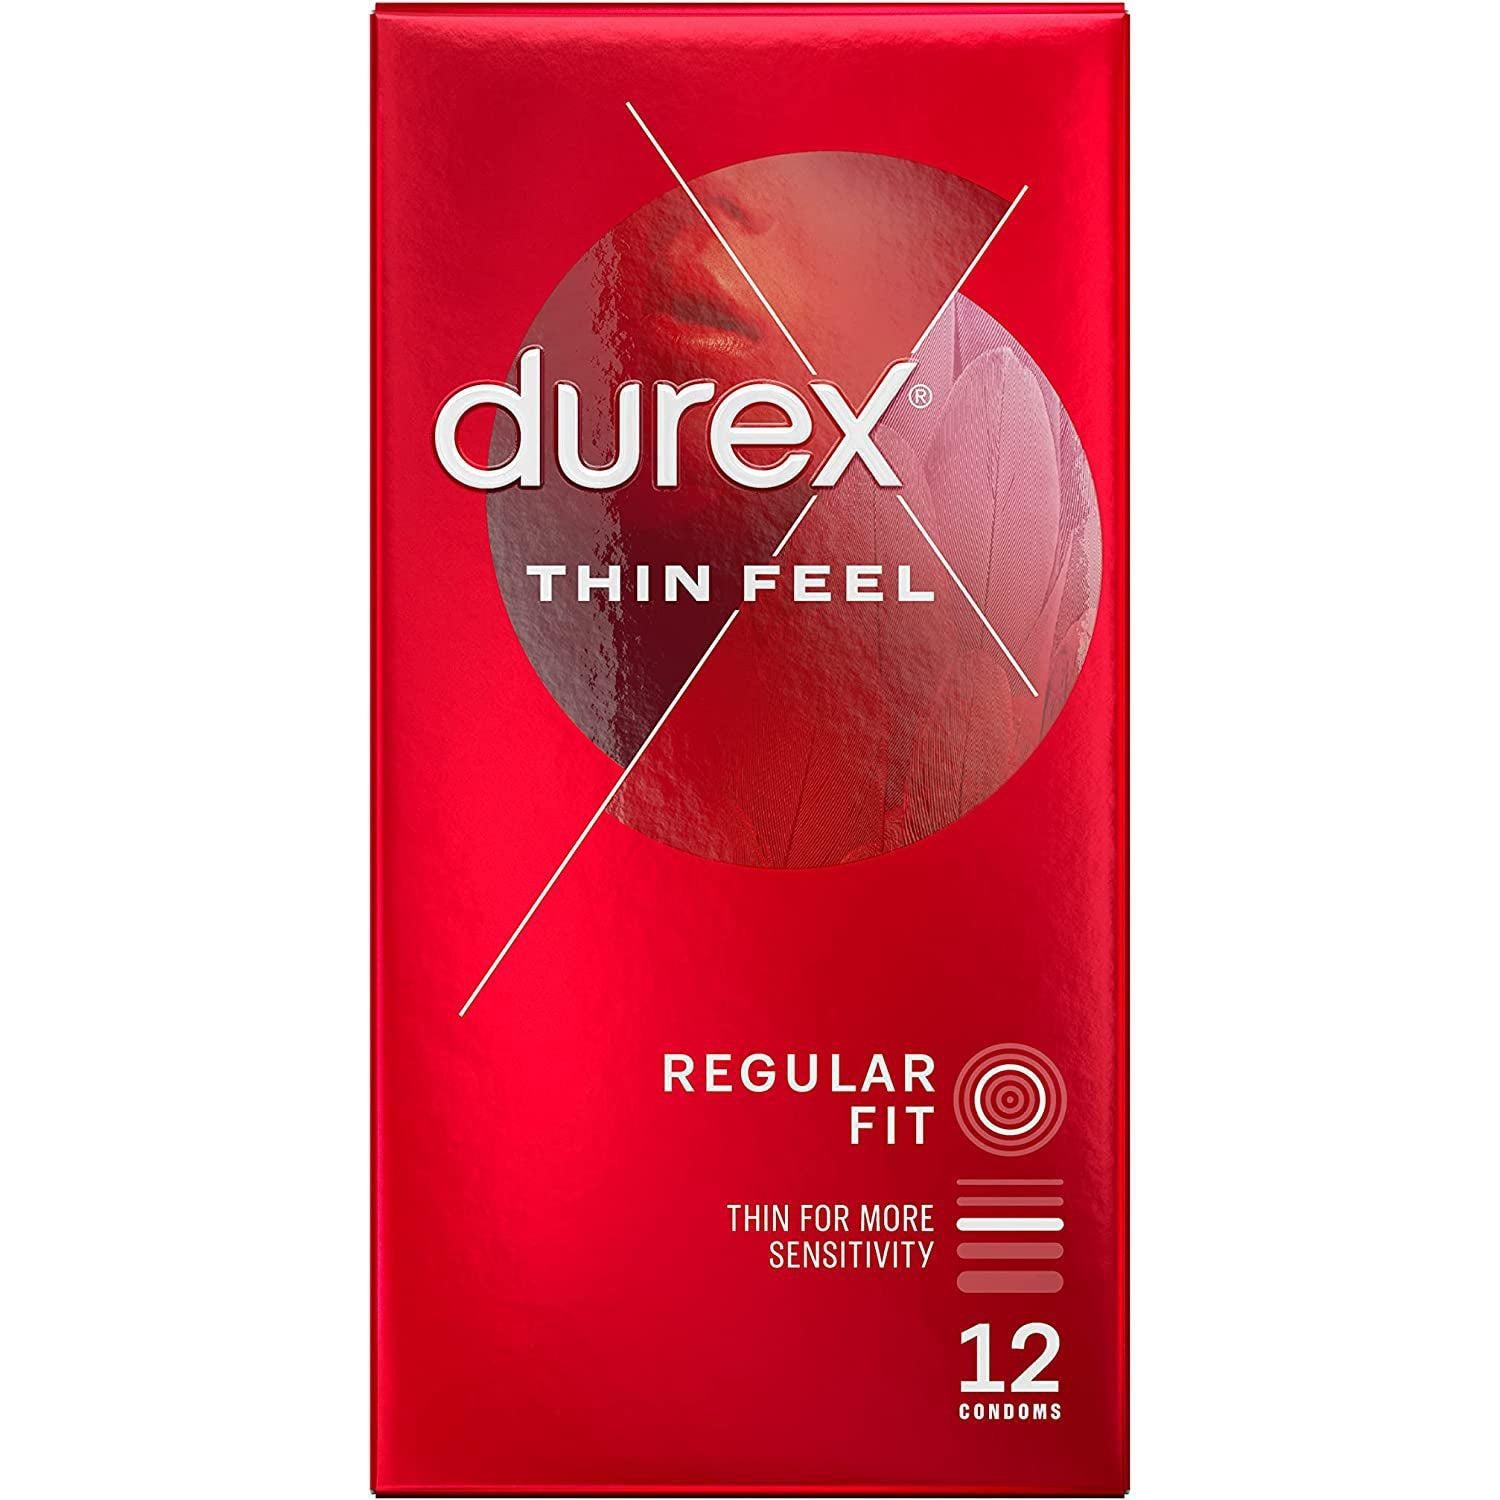 Durex Thin Feel Condoms, Pack of 12